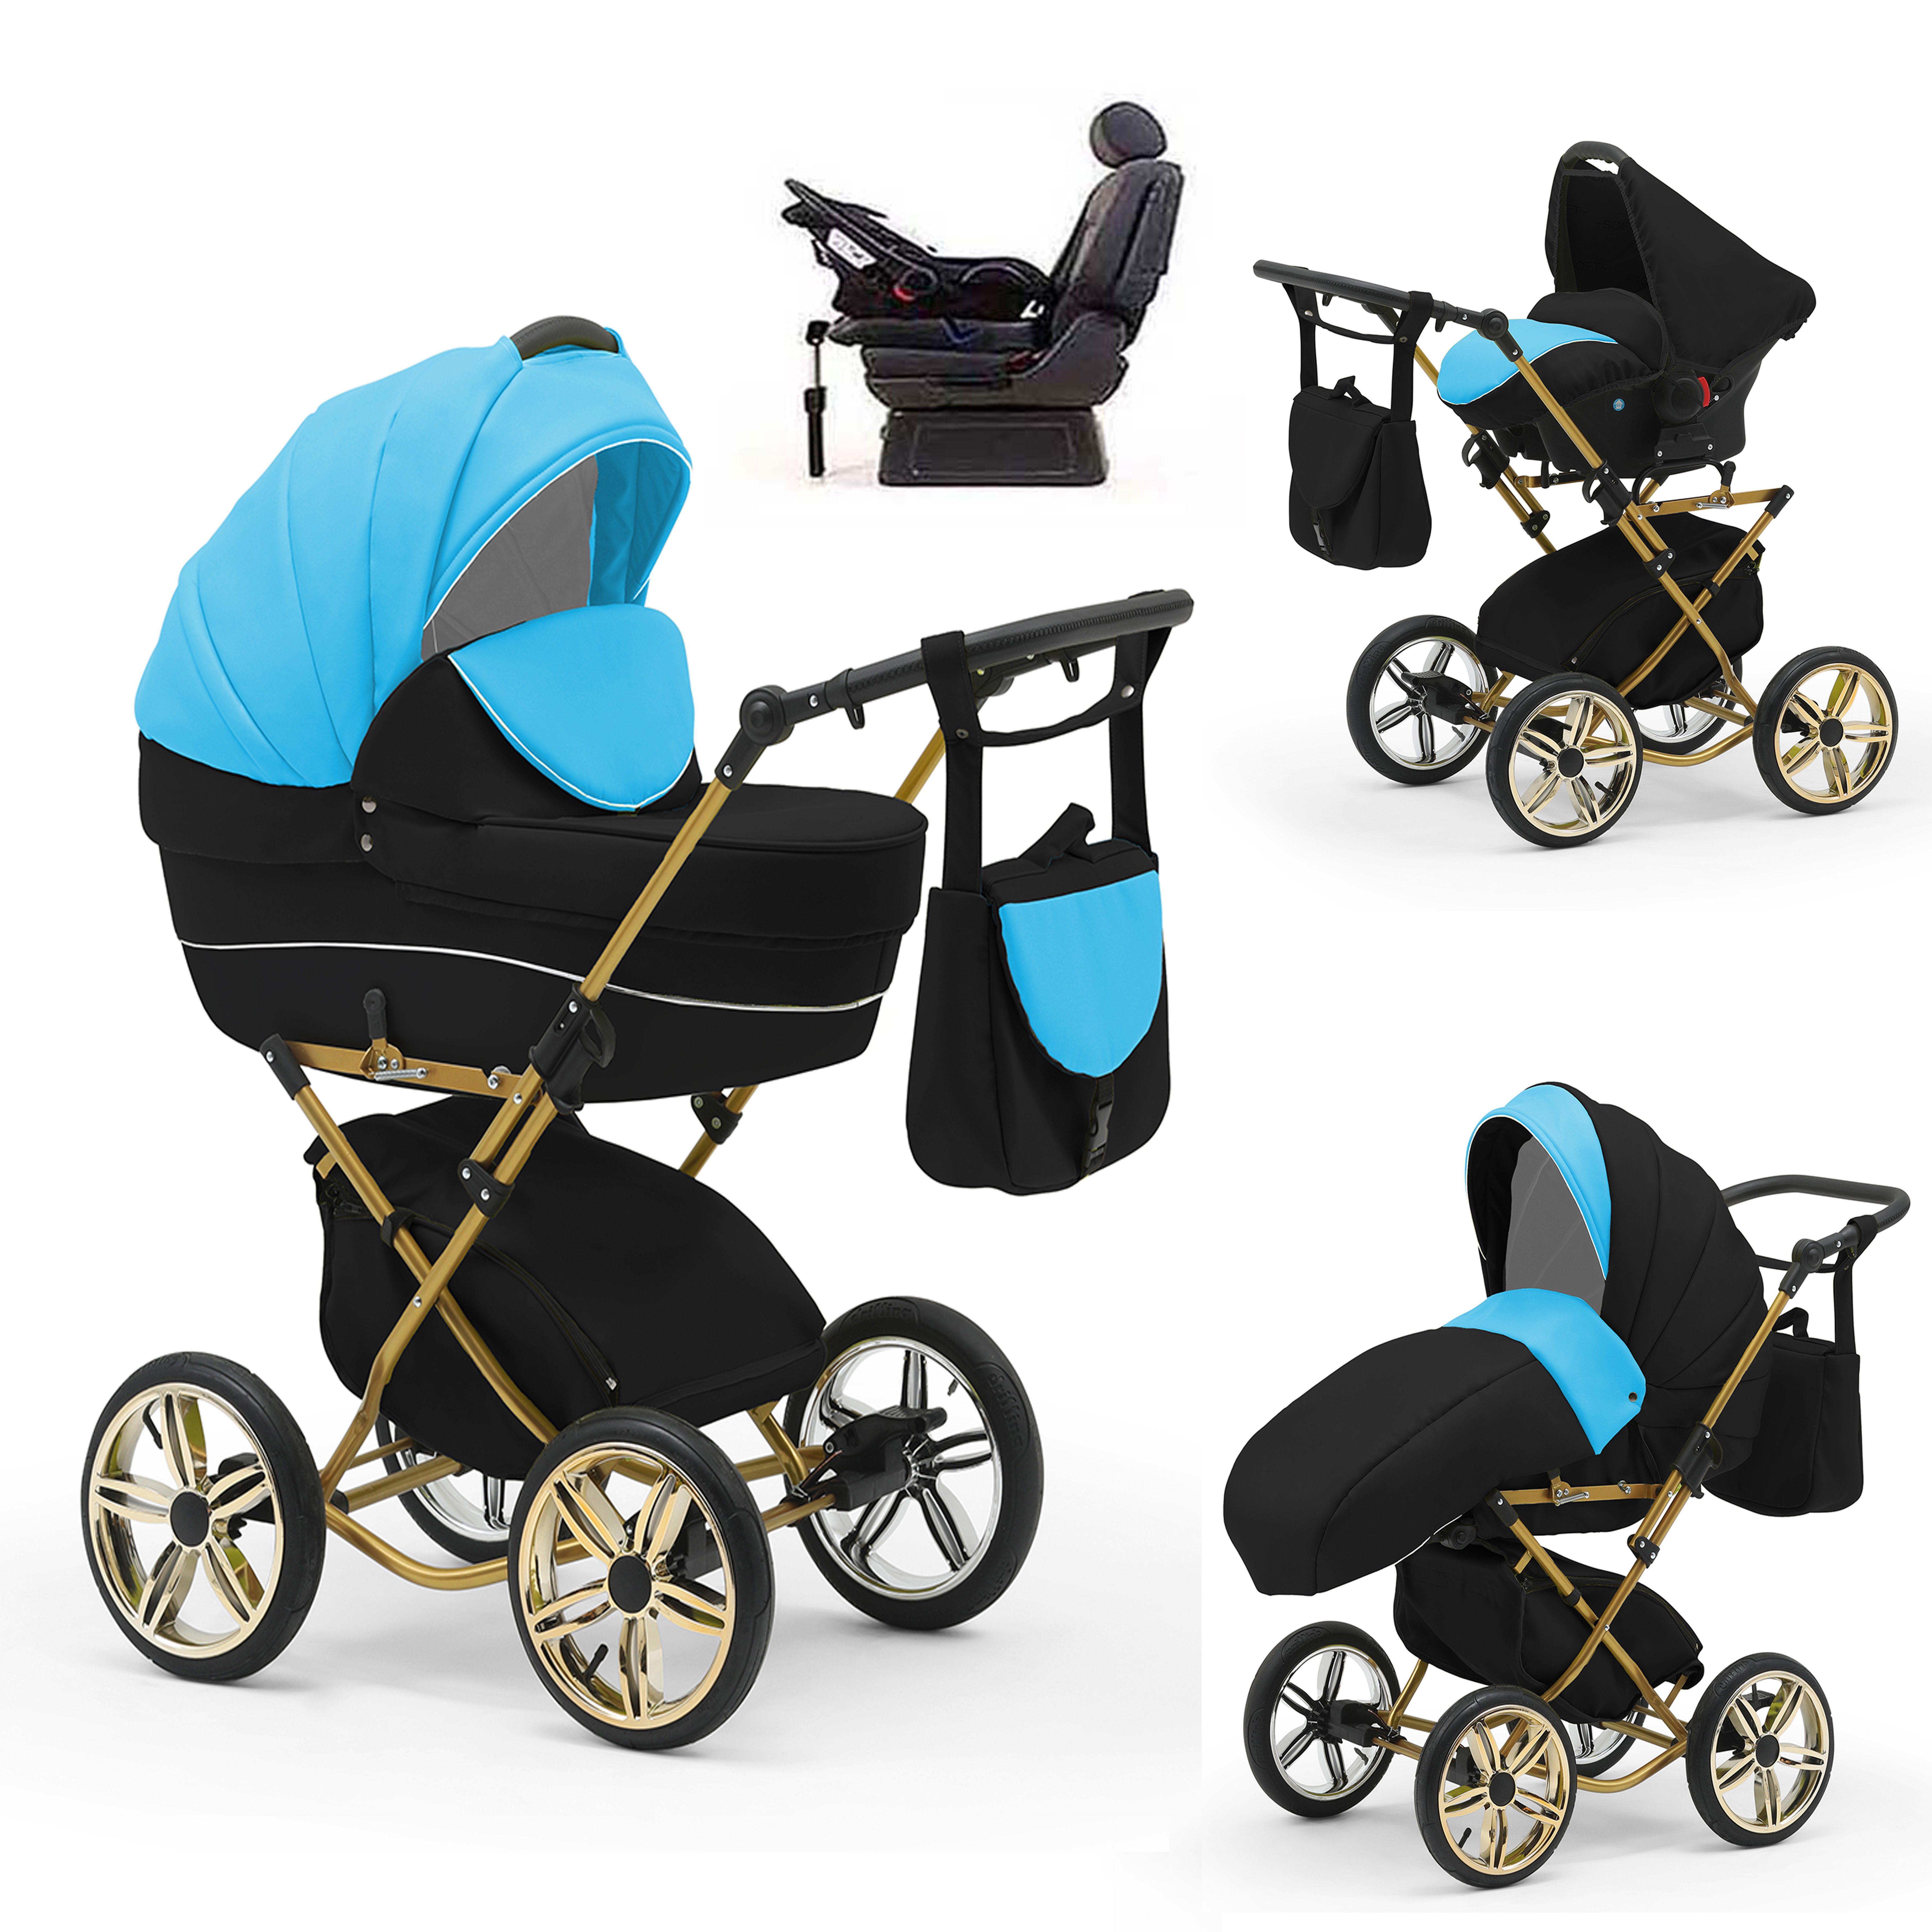 babies-on-wheels Kombi-Kinderwagen Sorento 4 in 1 inkl. Autositz und Iso Base - 14 Teile - in 10 Designs Türkis-Schwarz